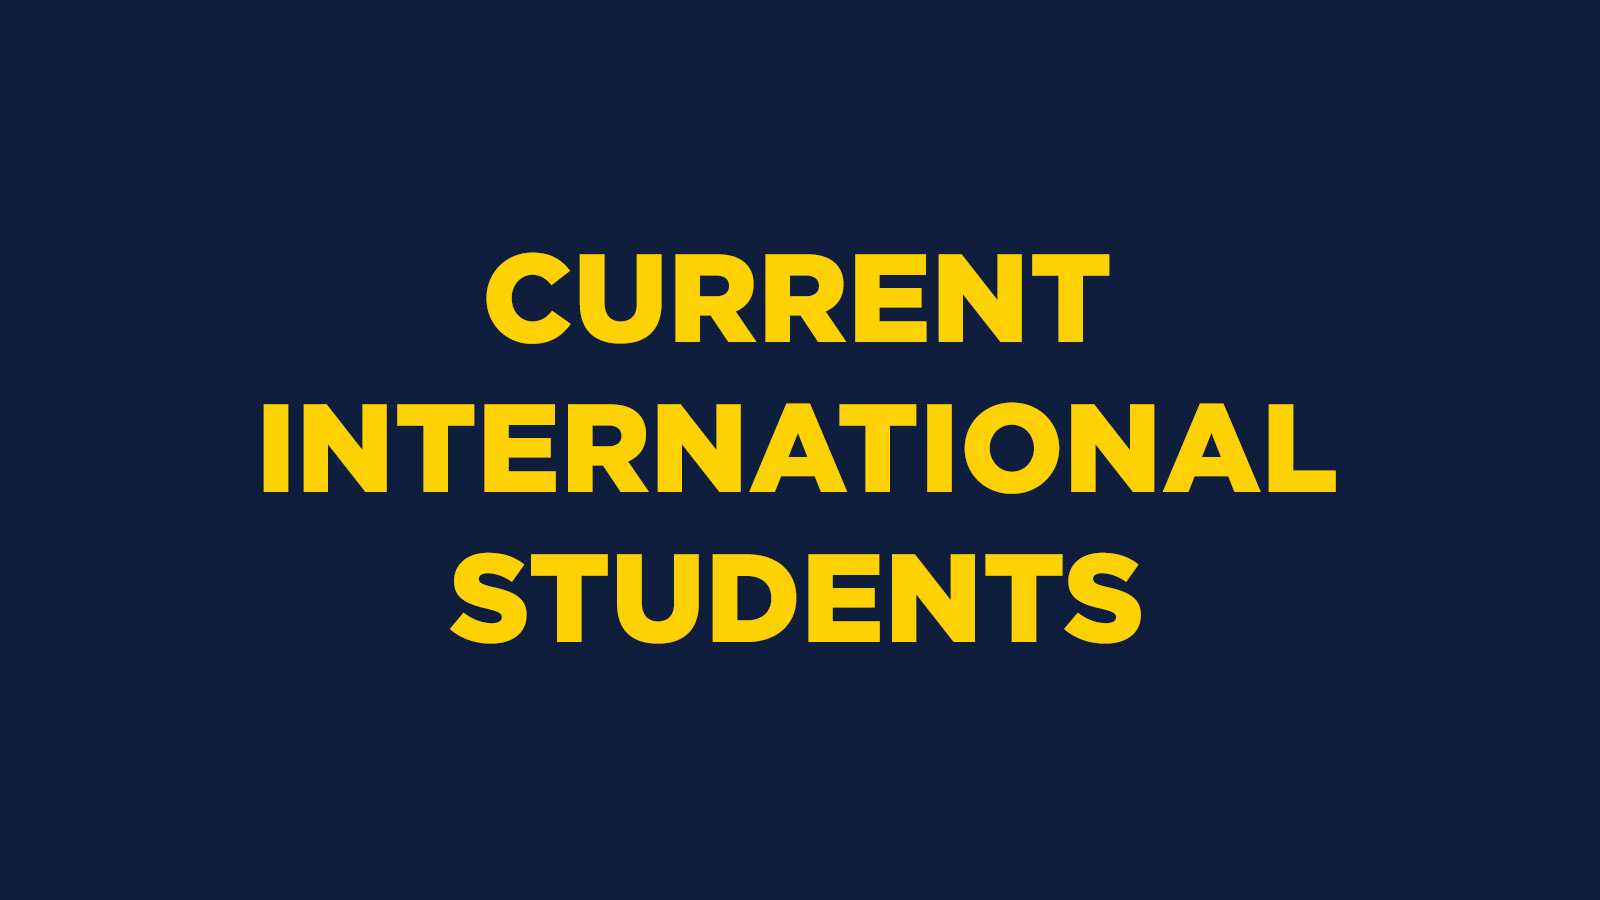 CURRENT INTERNATIONAL STUDENTS